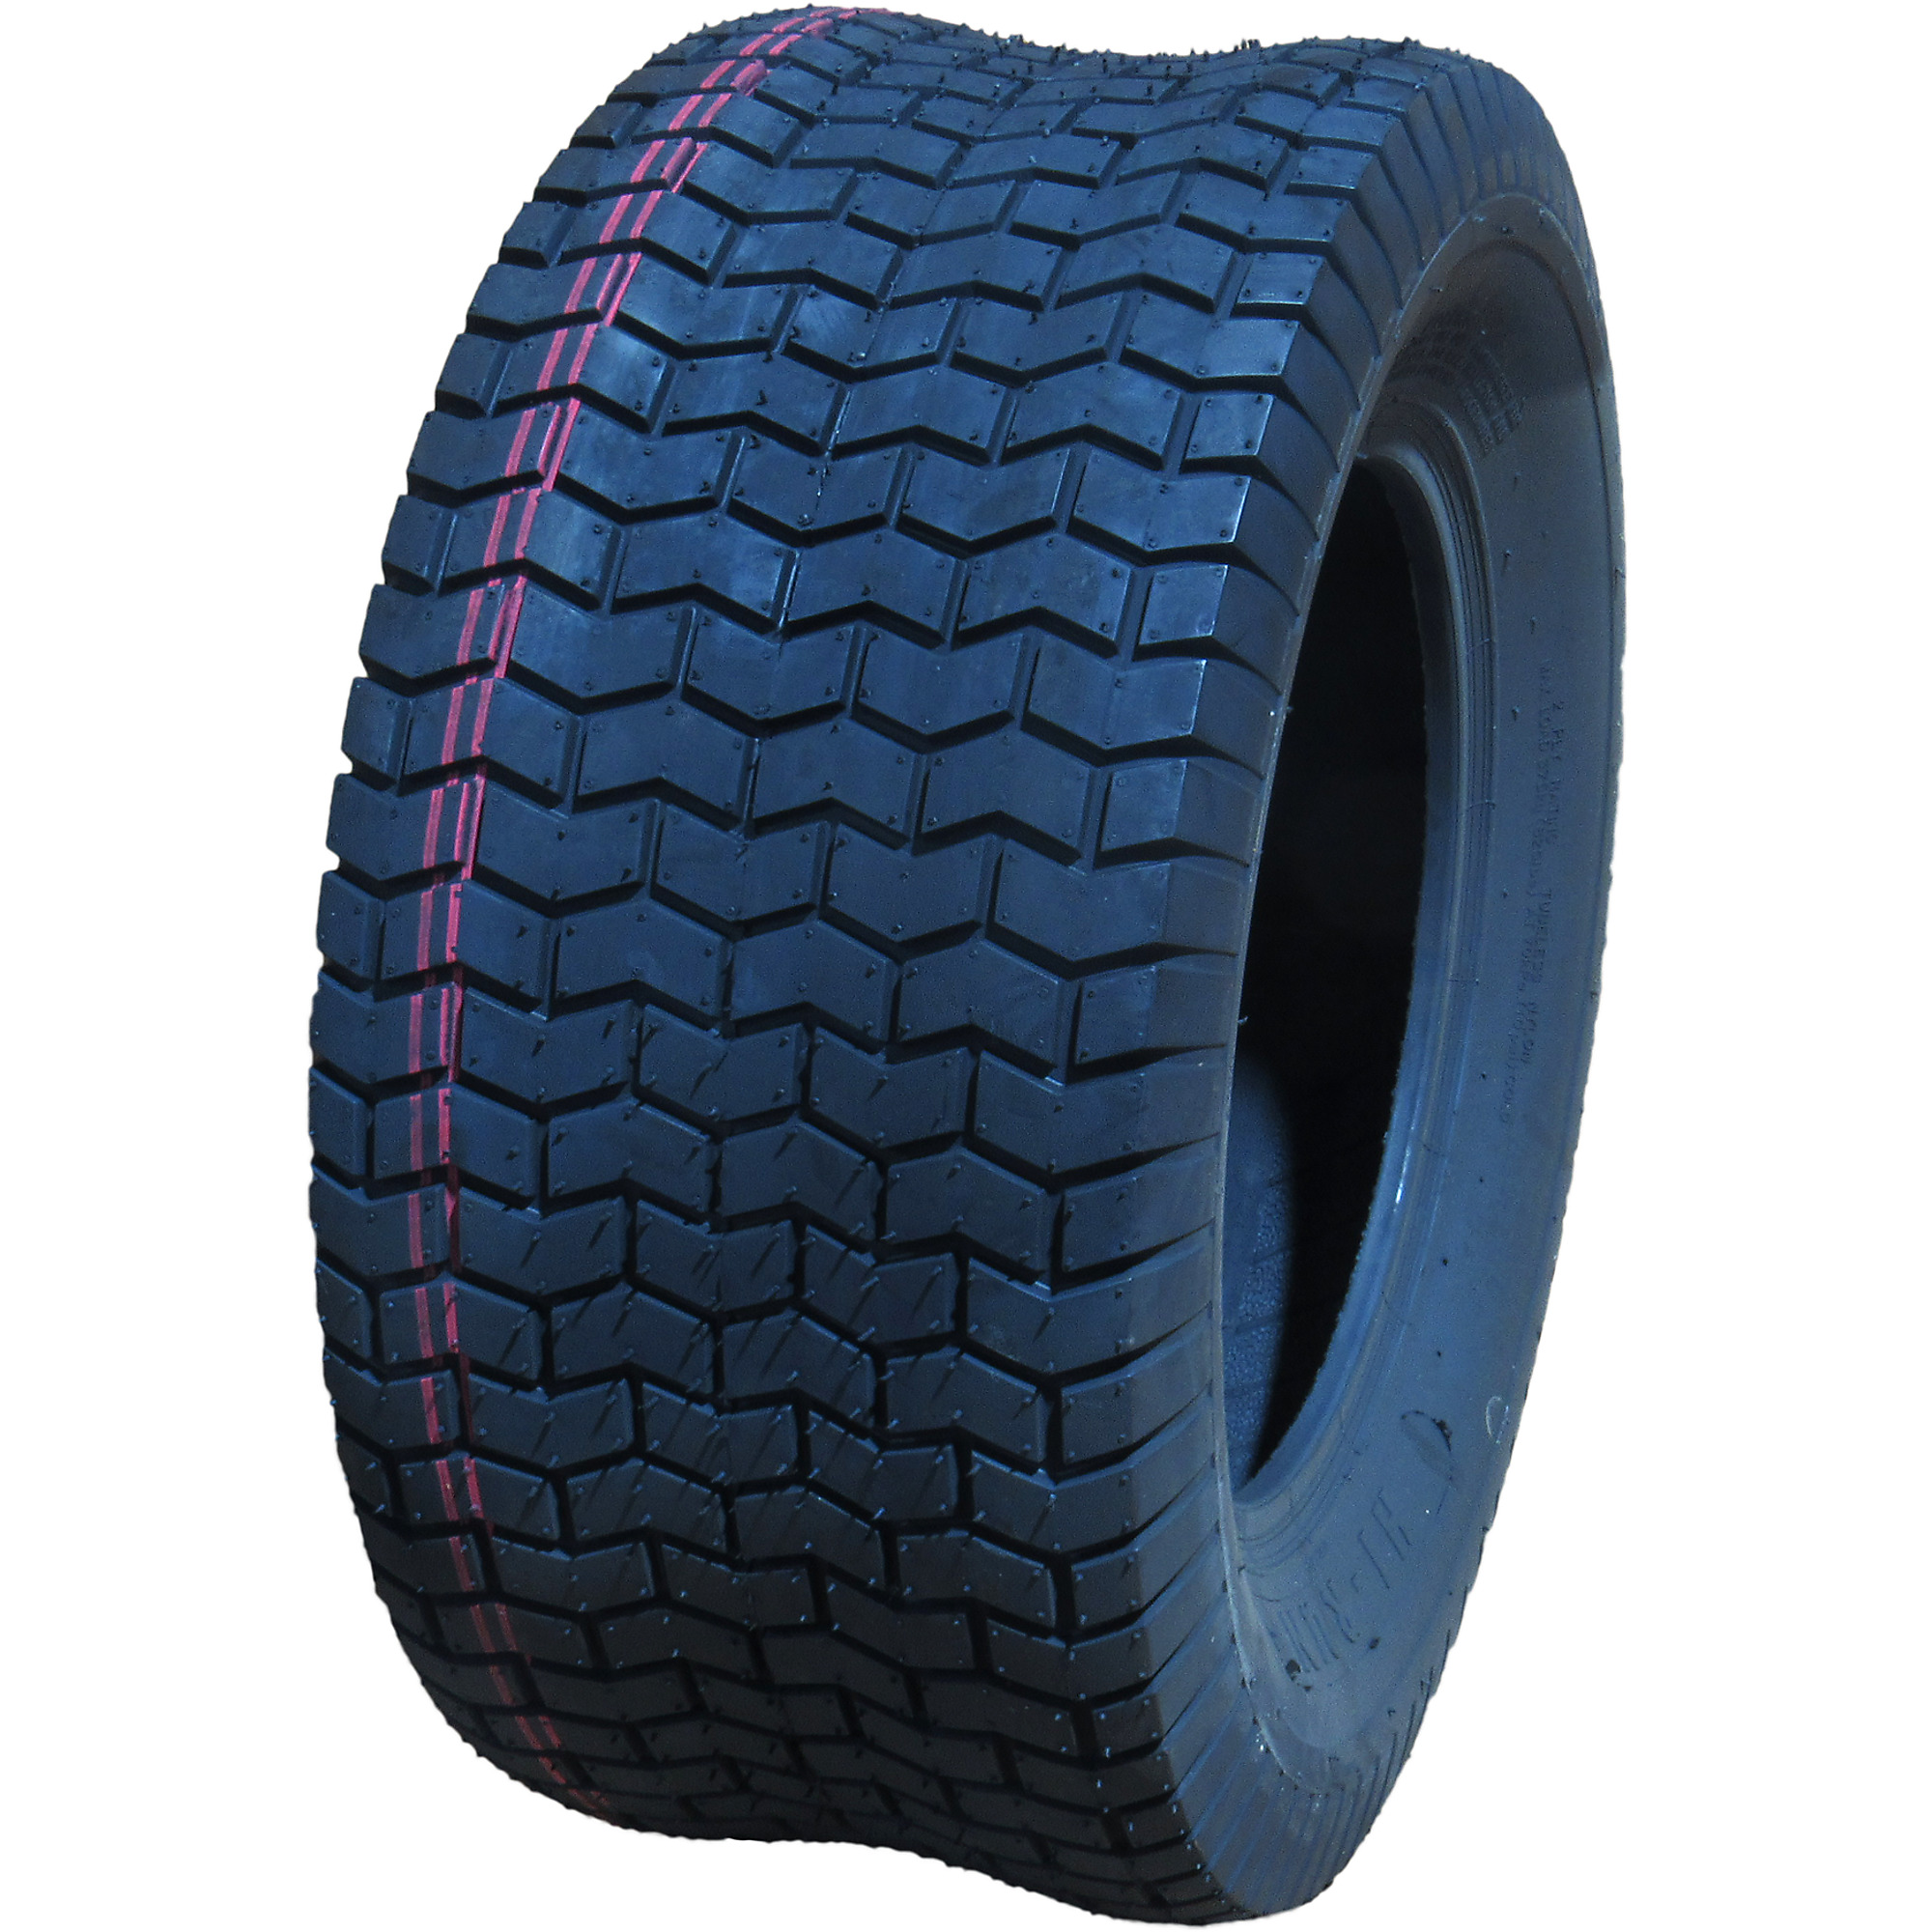 HI-RUN, Lawn Garden Tire, SU12 Turf II, Tire Size 23X9.5-12 Load Range Rating A, Model WD1283